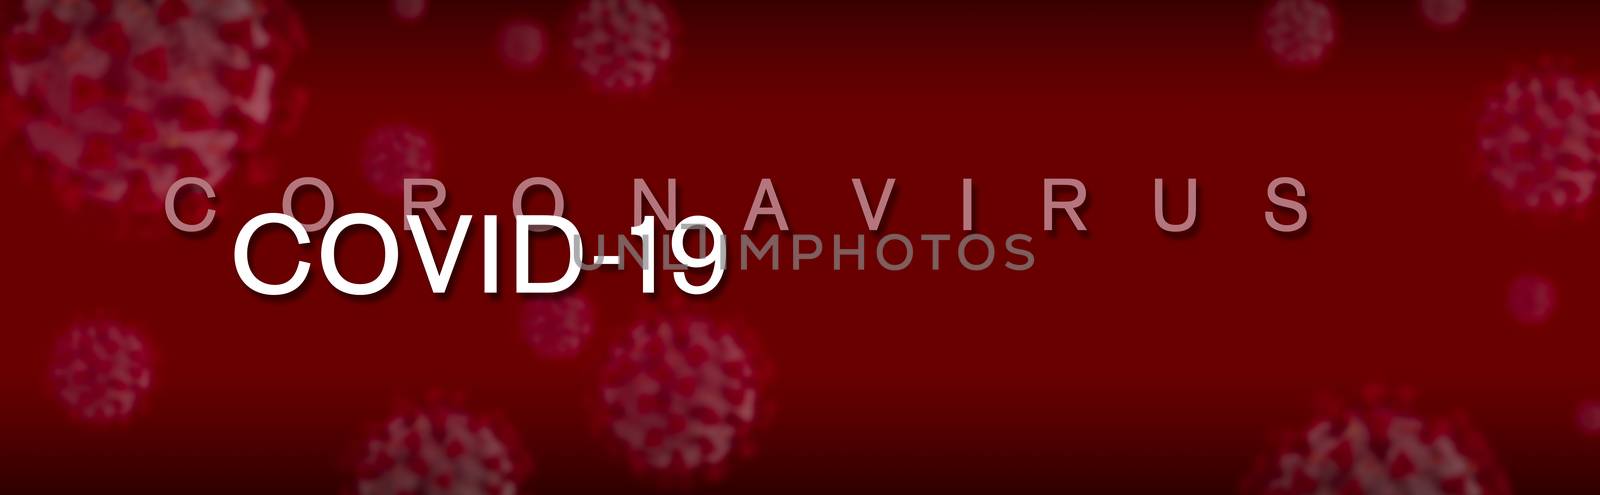 Red Banner of Coronavirus COVID-19 Cells Background.